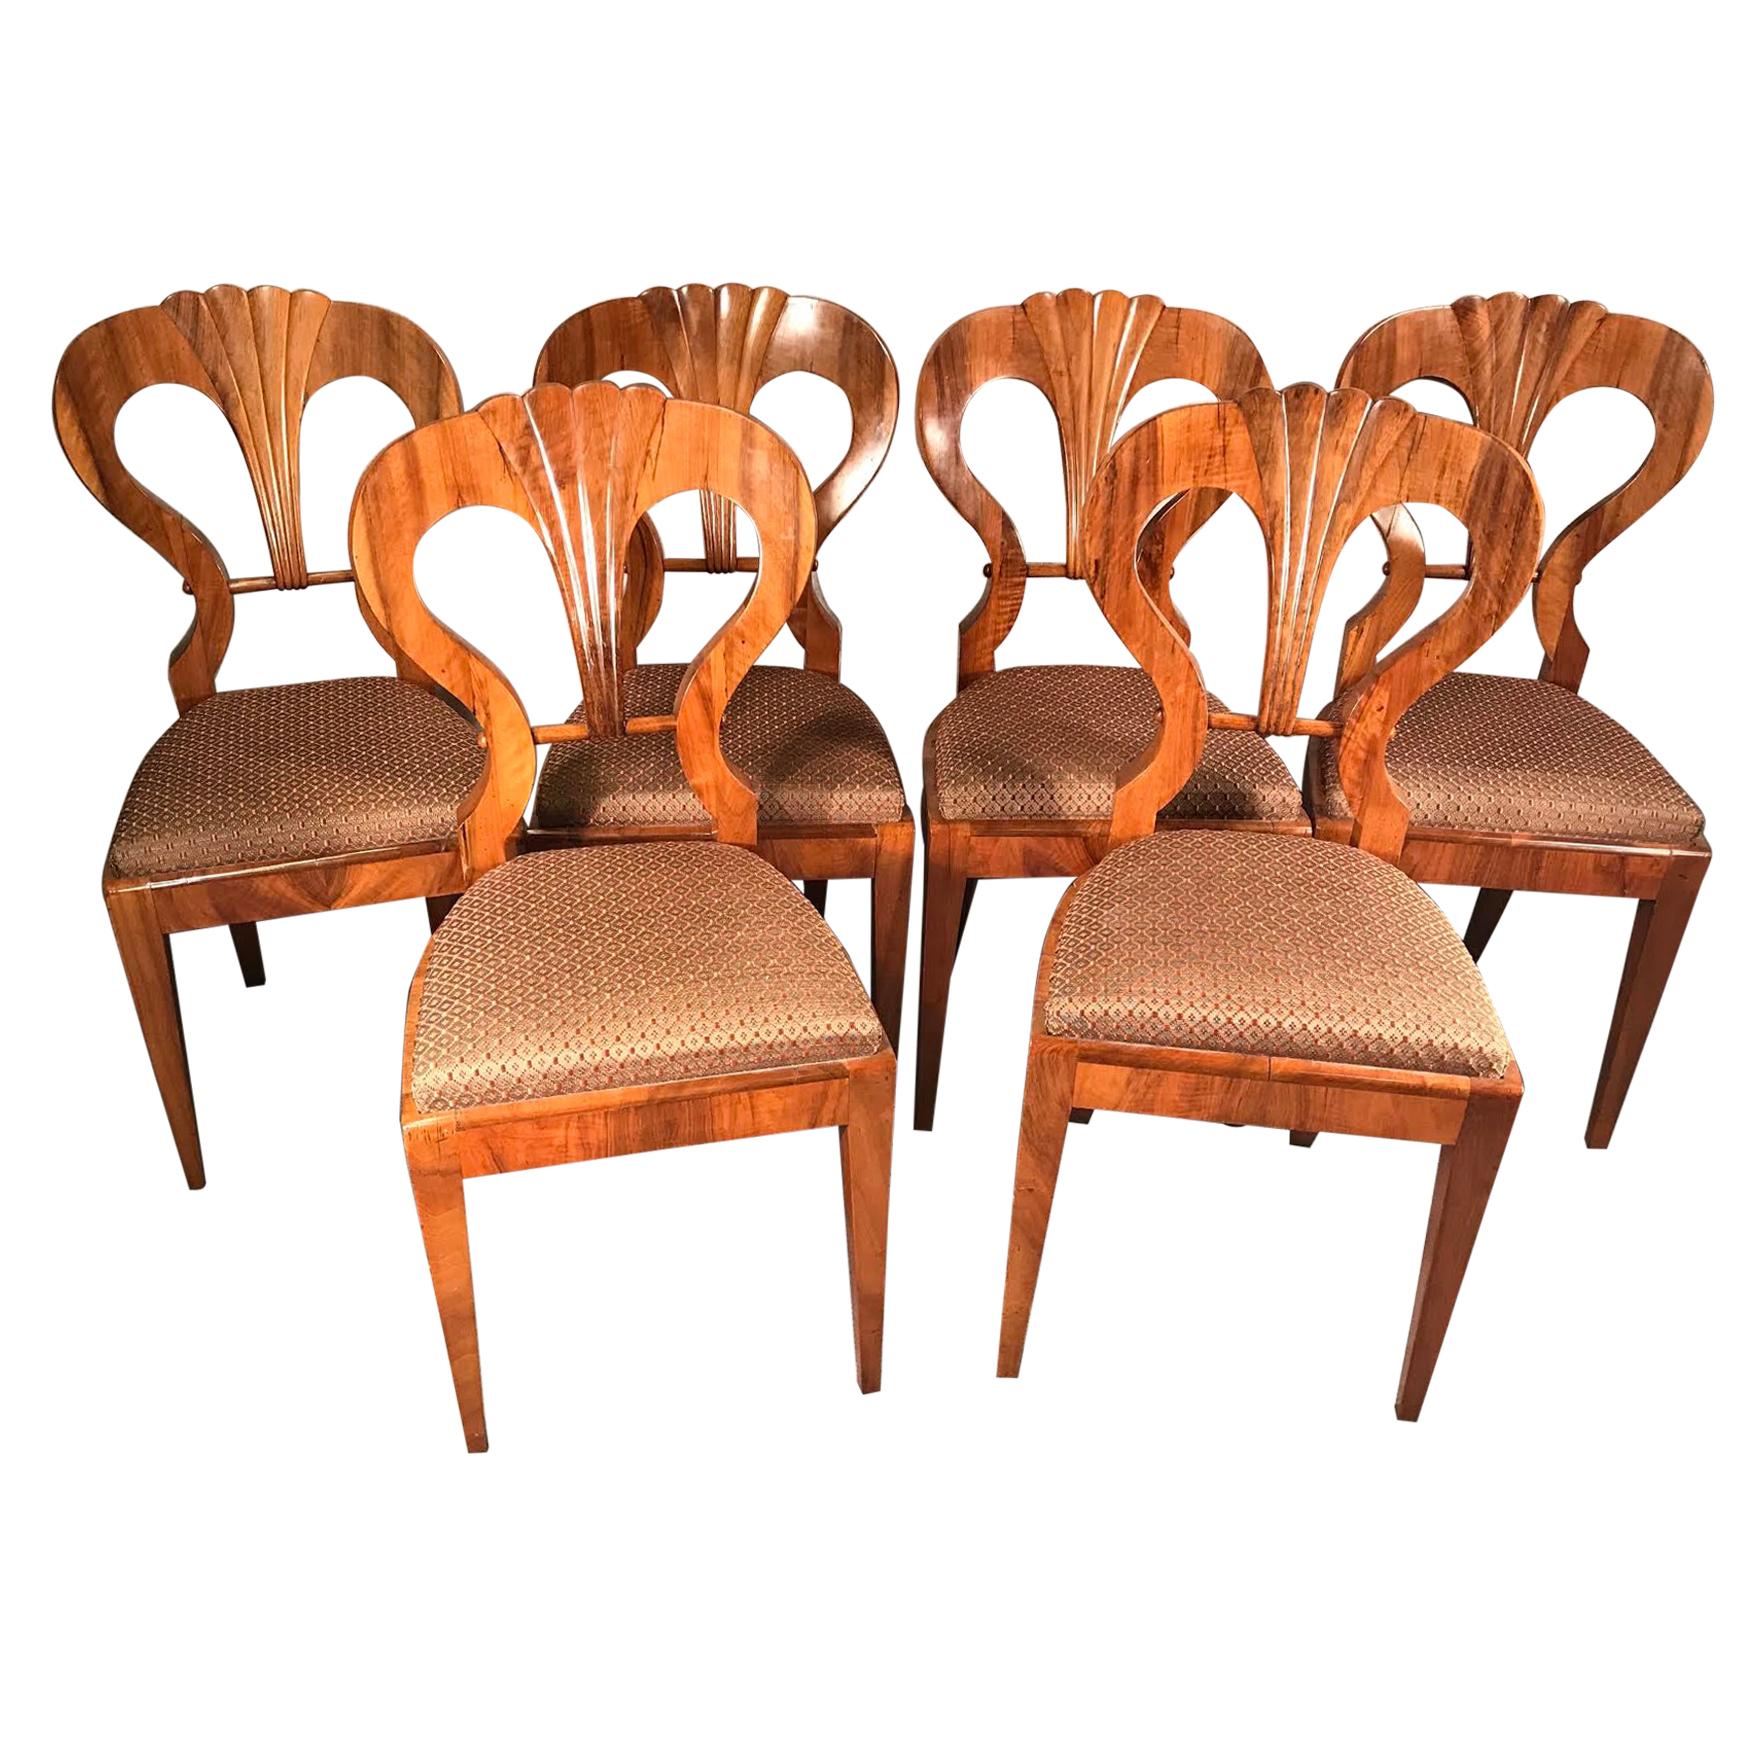 Set of Six Original Biedermeier Chairs, att. to Josef Danhauser, Vienna, 1820